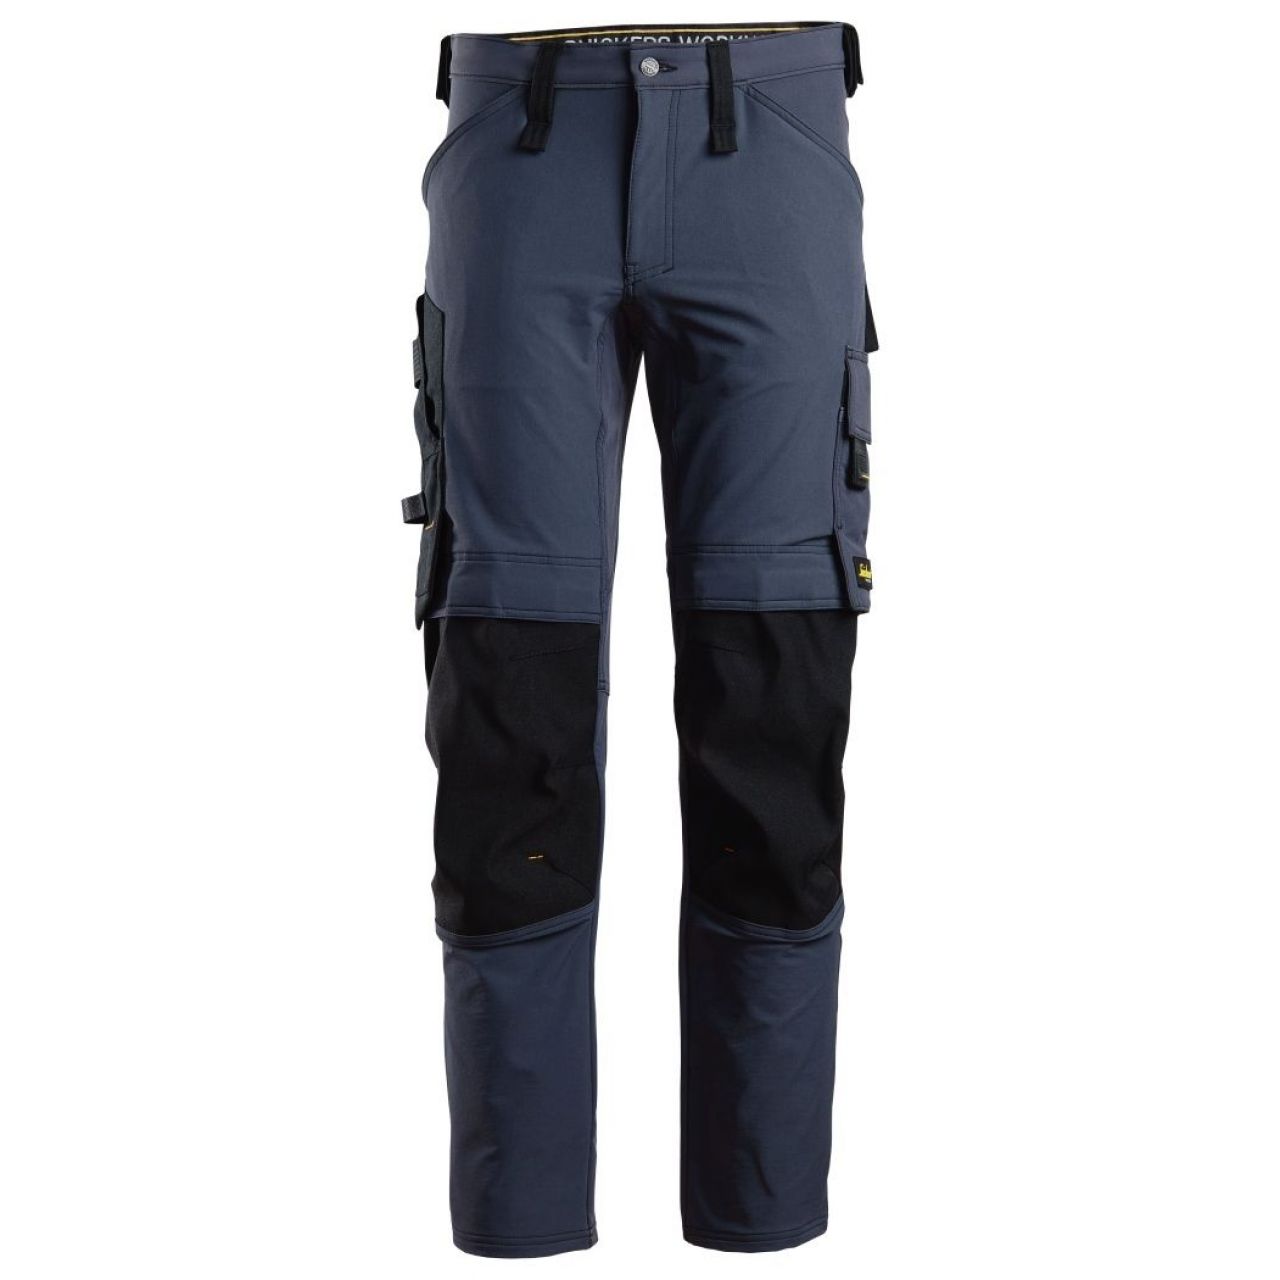 Pantalon elastico AllroundWork azul marino-negro talla 196